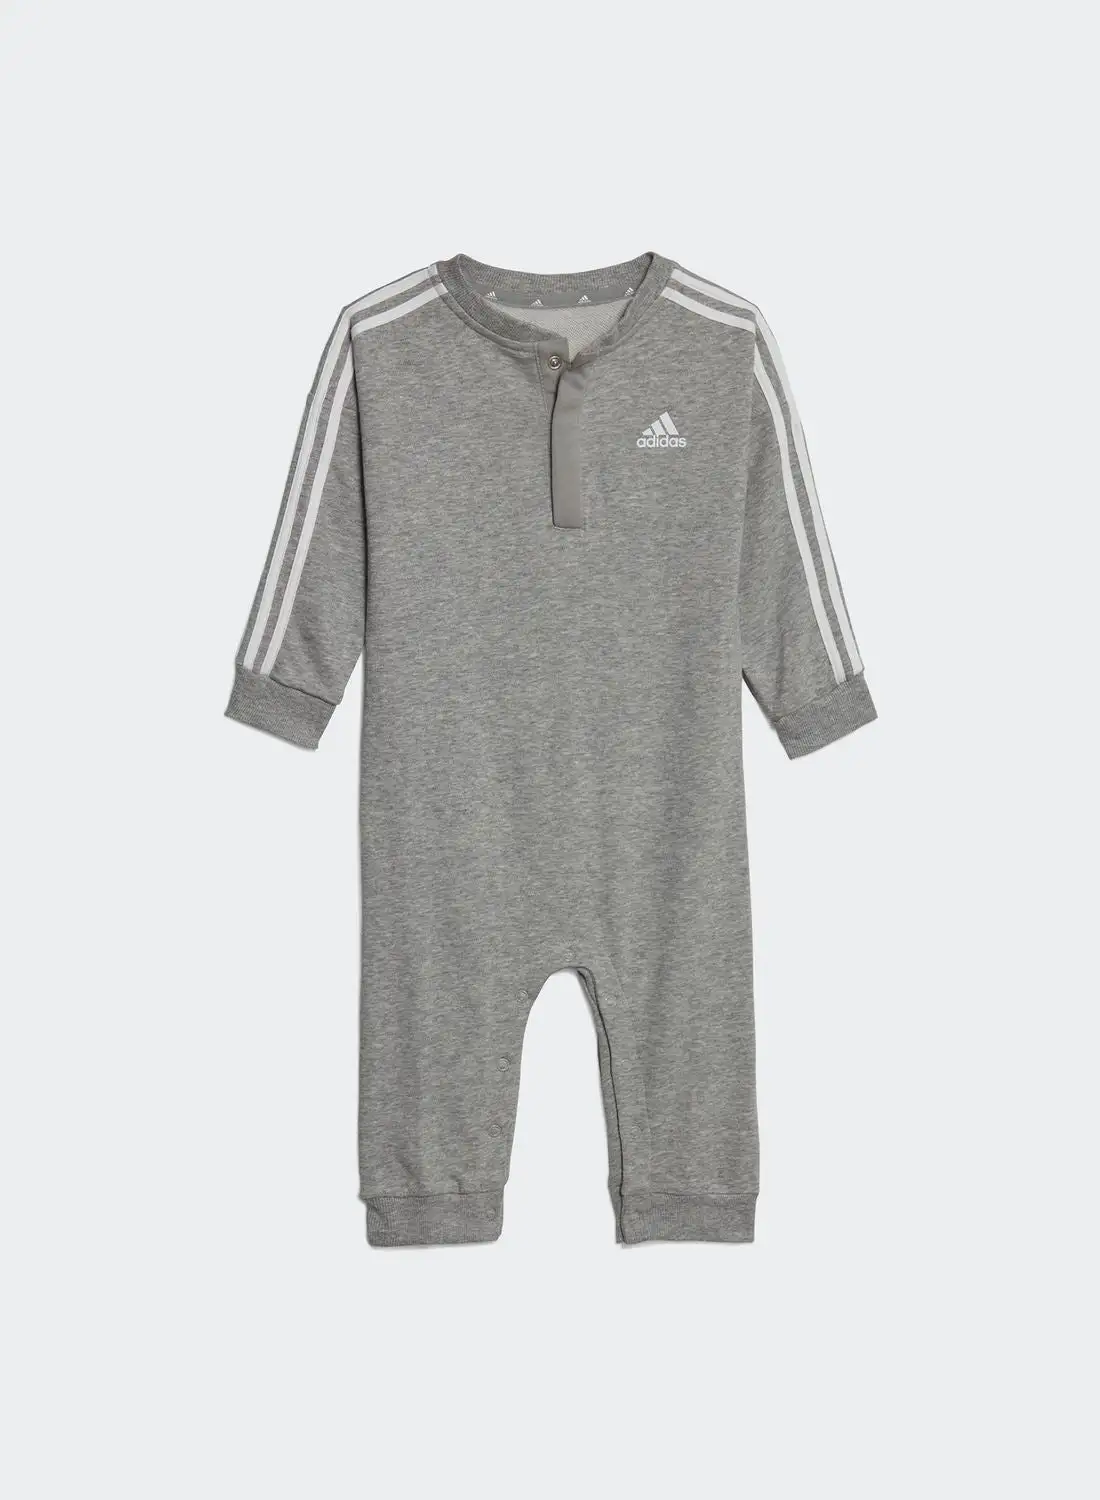 Adidas Infant 3 Stripe Essential French Terry Bodysuit